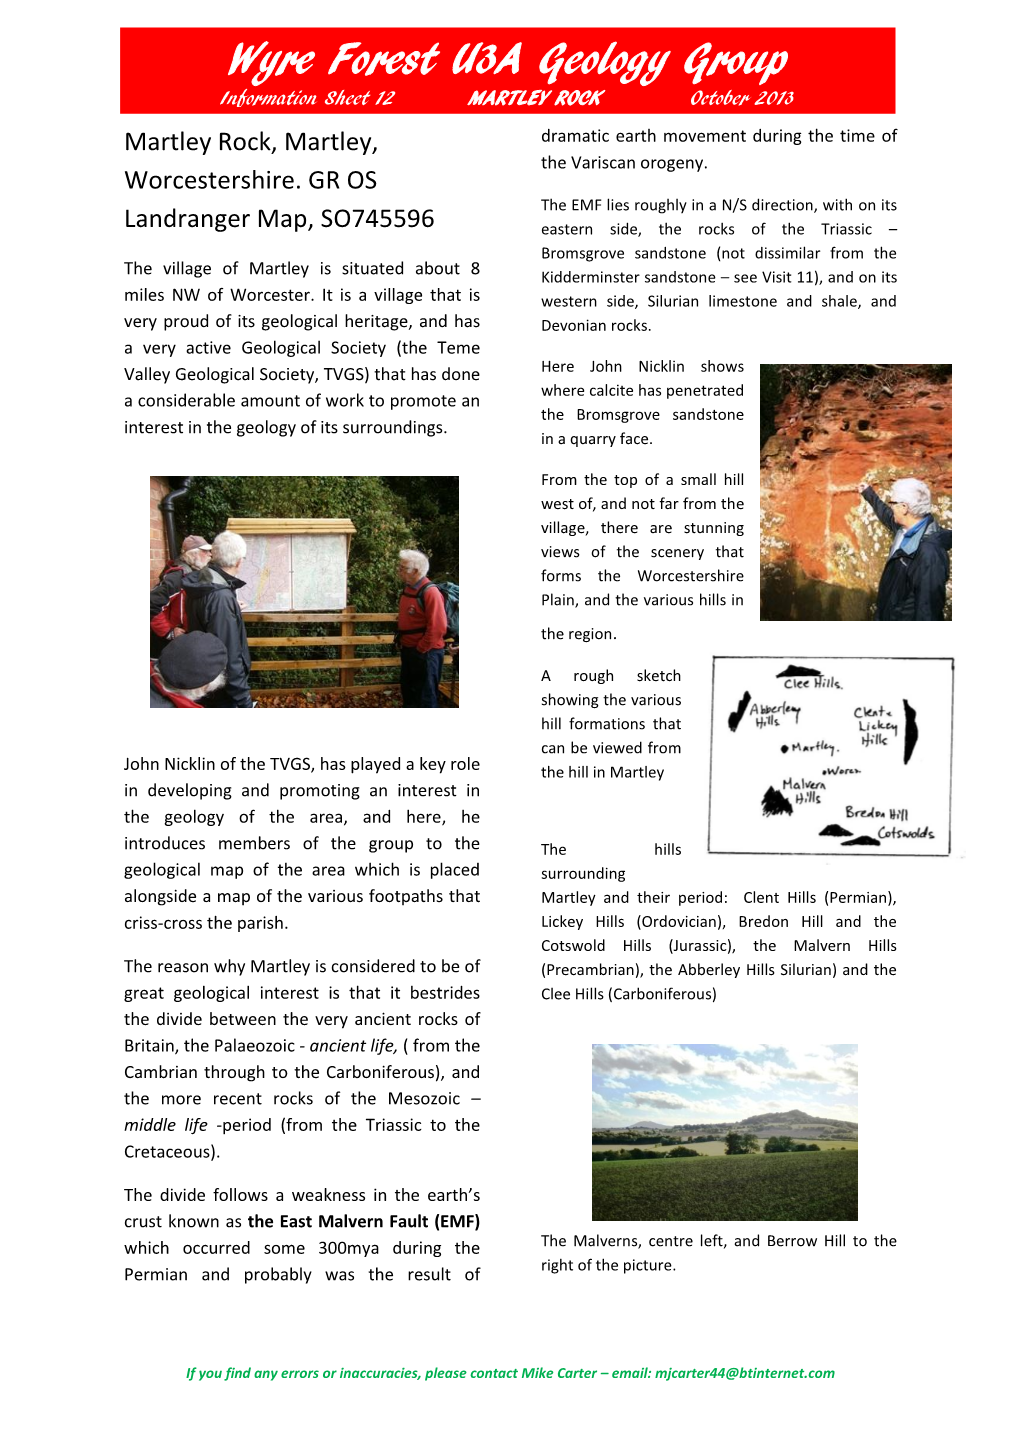 Wyre Forest U3A Geology Group Information Sheet 12 MARTLEY ROCK October 2013